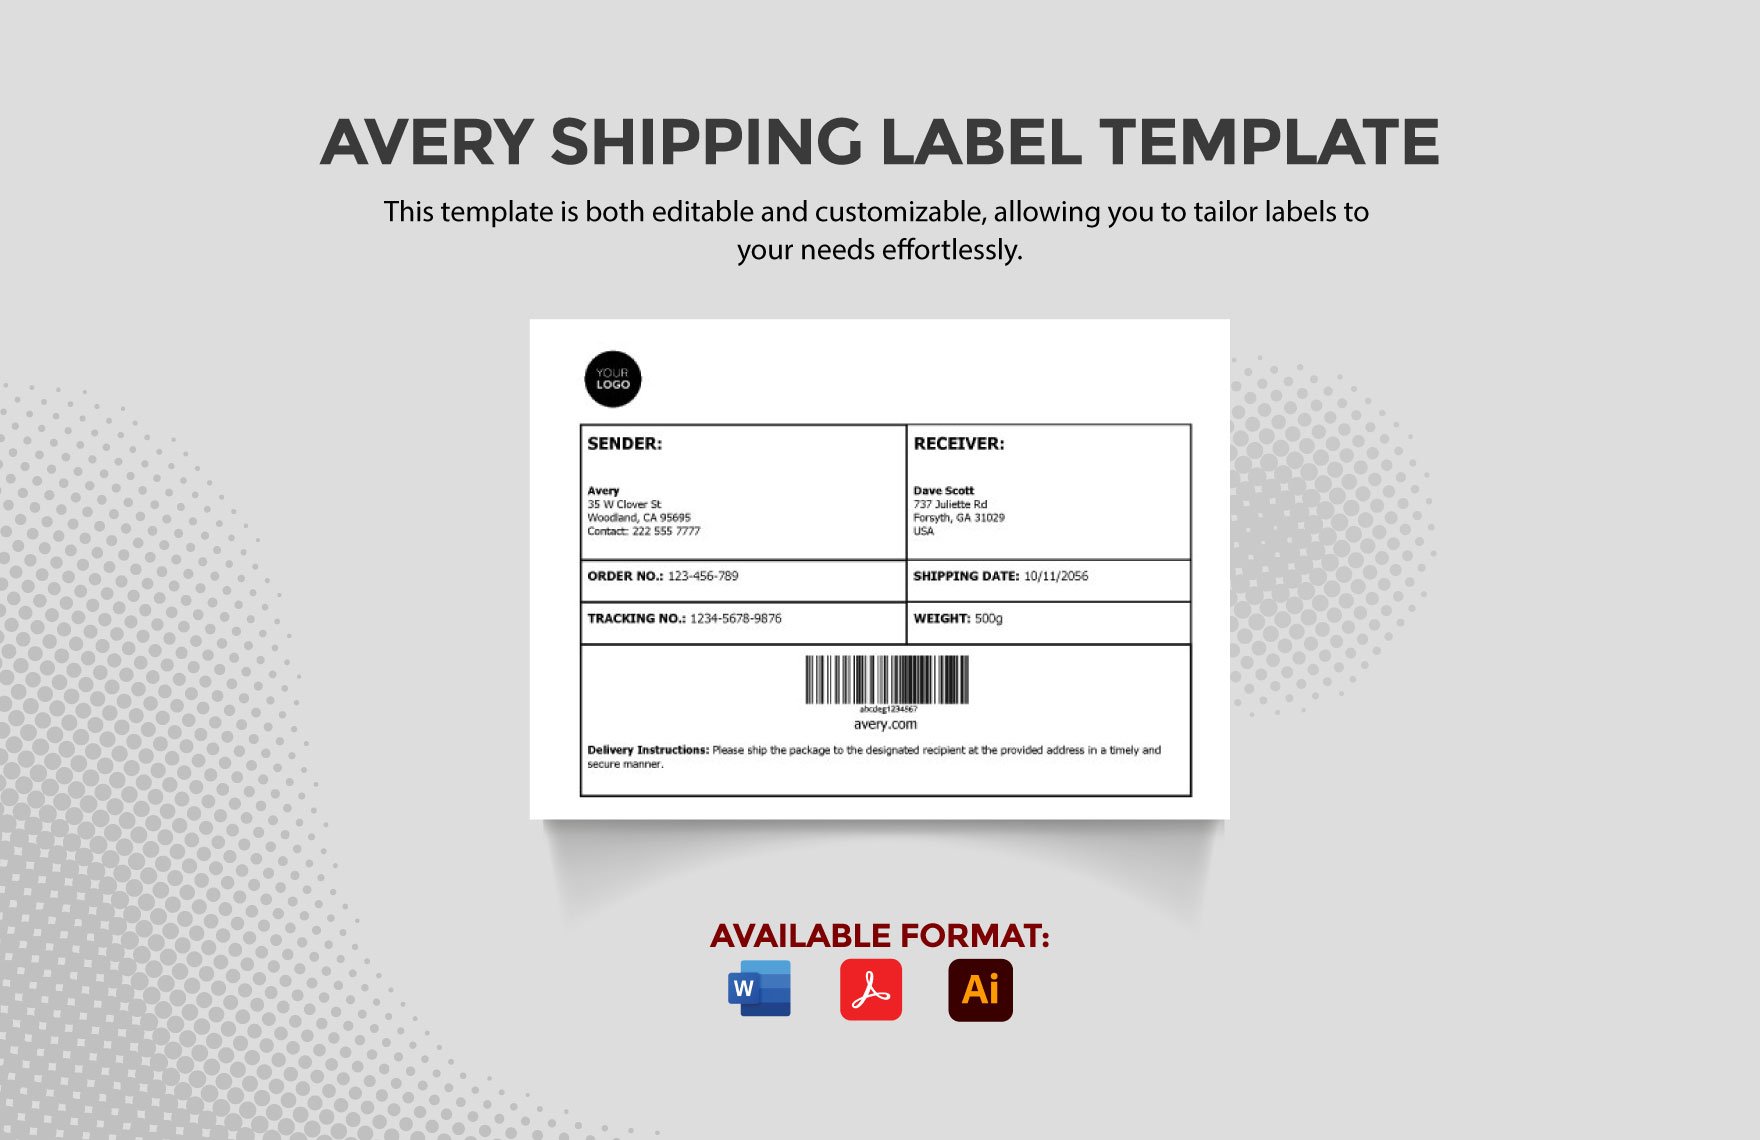 Avery Shipping Label Template in Word, PDF, Illustrator, JPG